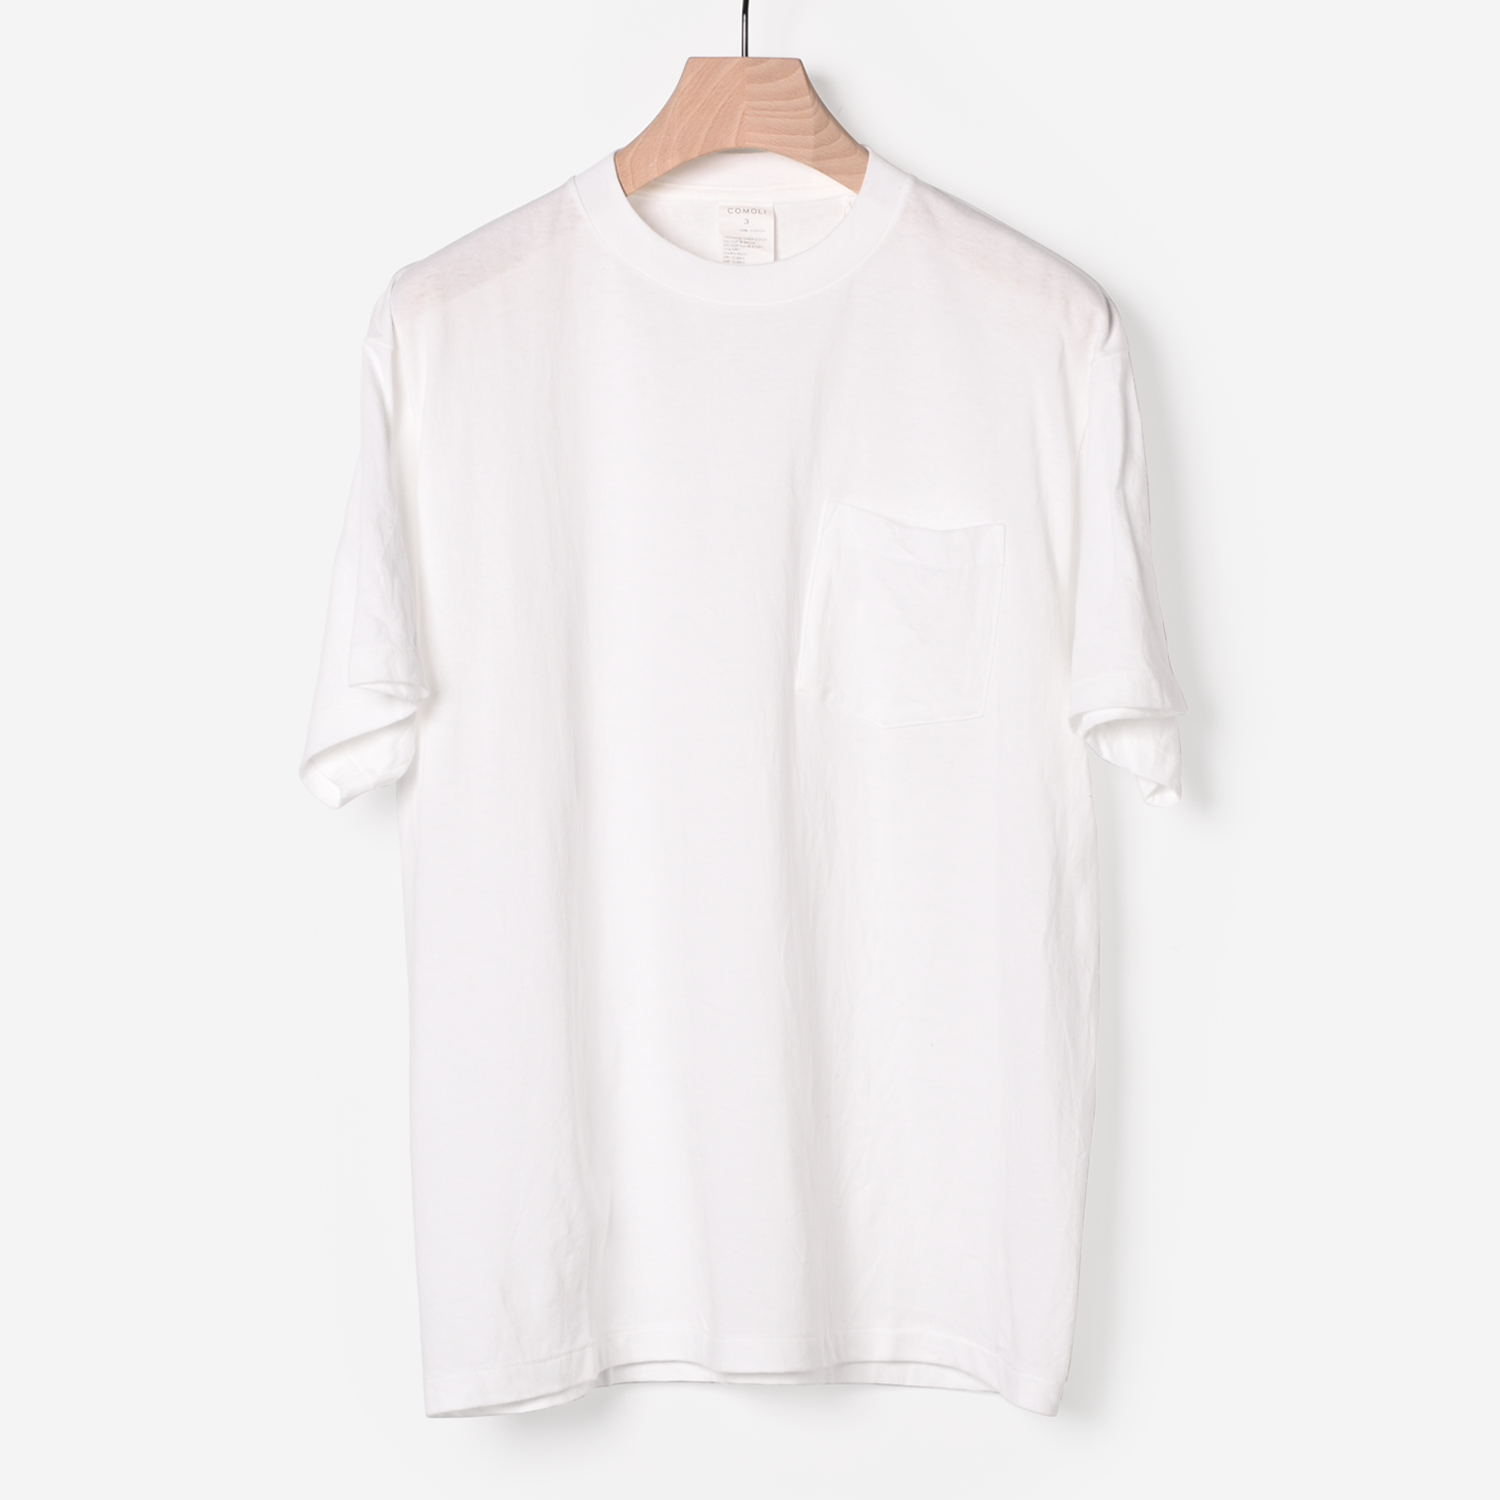 SURPLUS Tシャツ comoli 23ss サープラス ホワイト www.krzysztofbialy.com